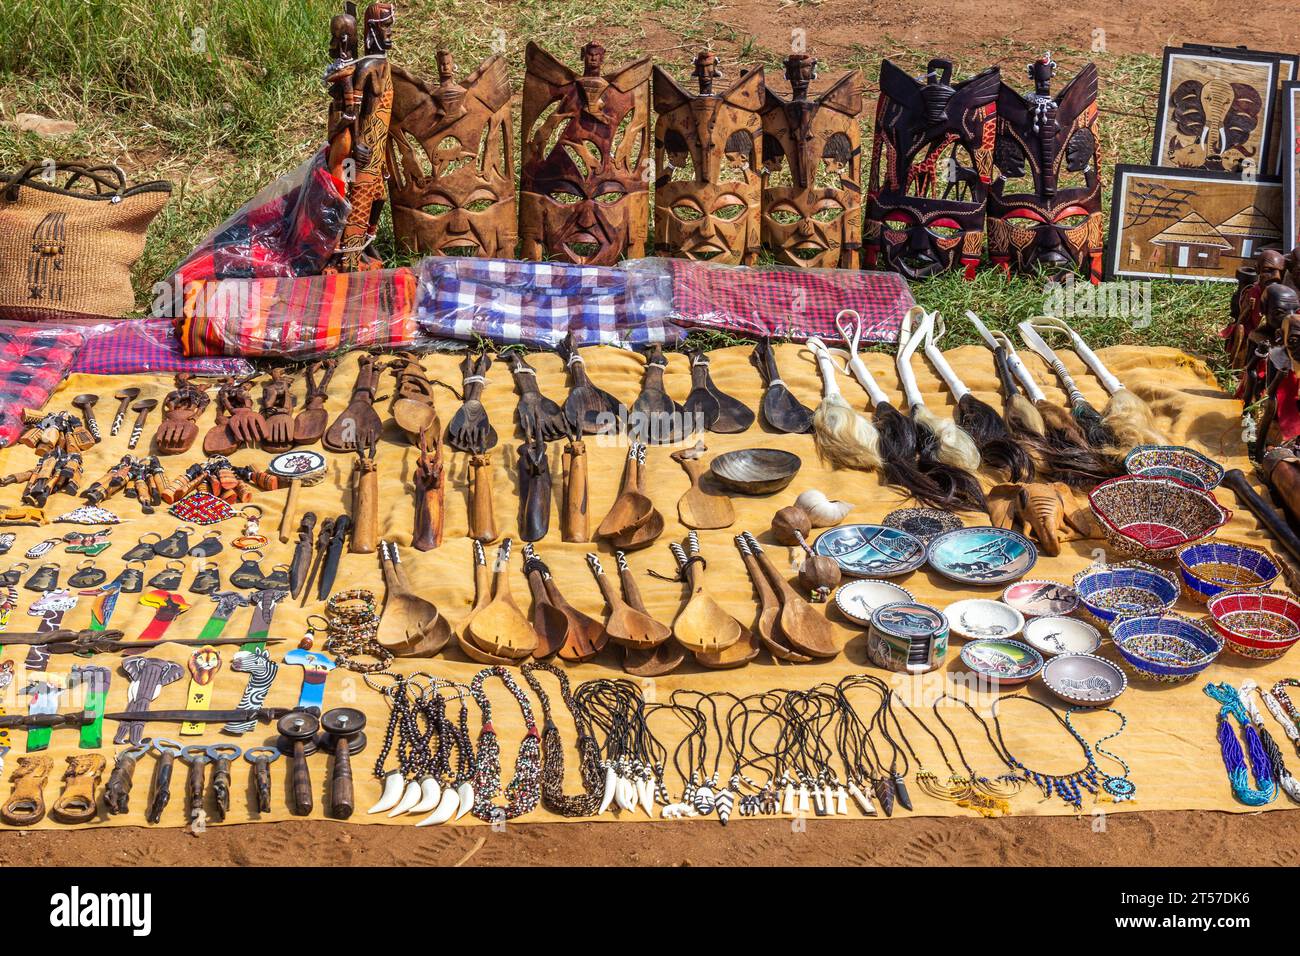 MASAI MARA, KENYA - FEBRUARY 19, 2020: Masai-made souvenirs for sale in Masai Mara National Reserve, Kenya Stock Photo